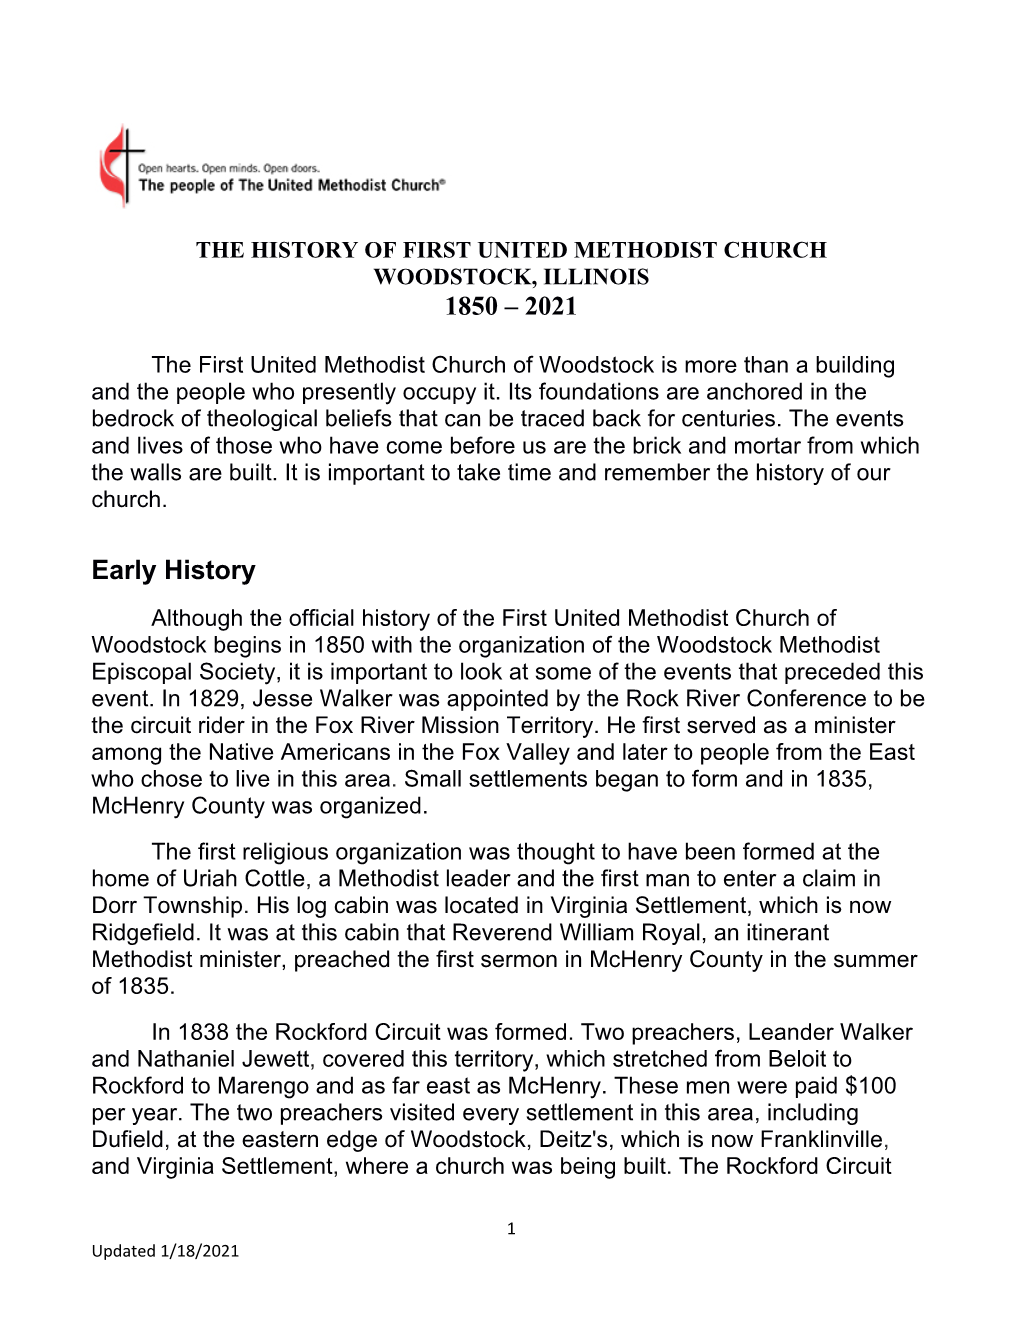 The History of First United Methodist Church Woodstock, Illinois 1850 – 2021